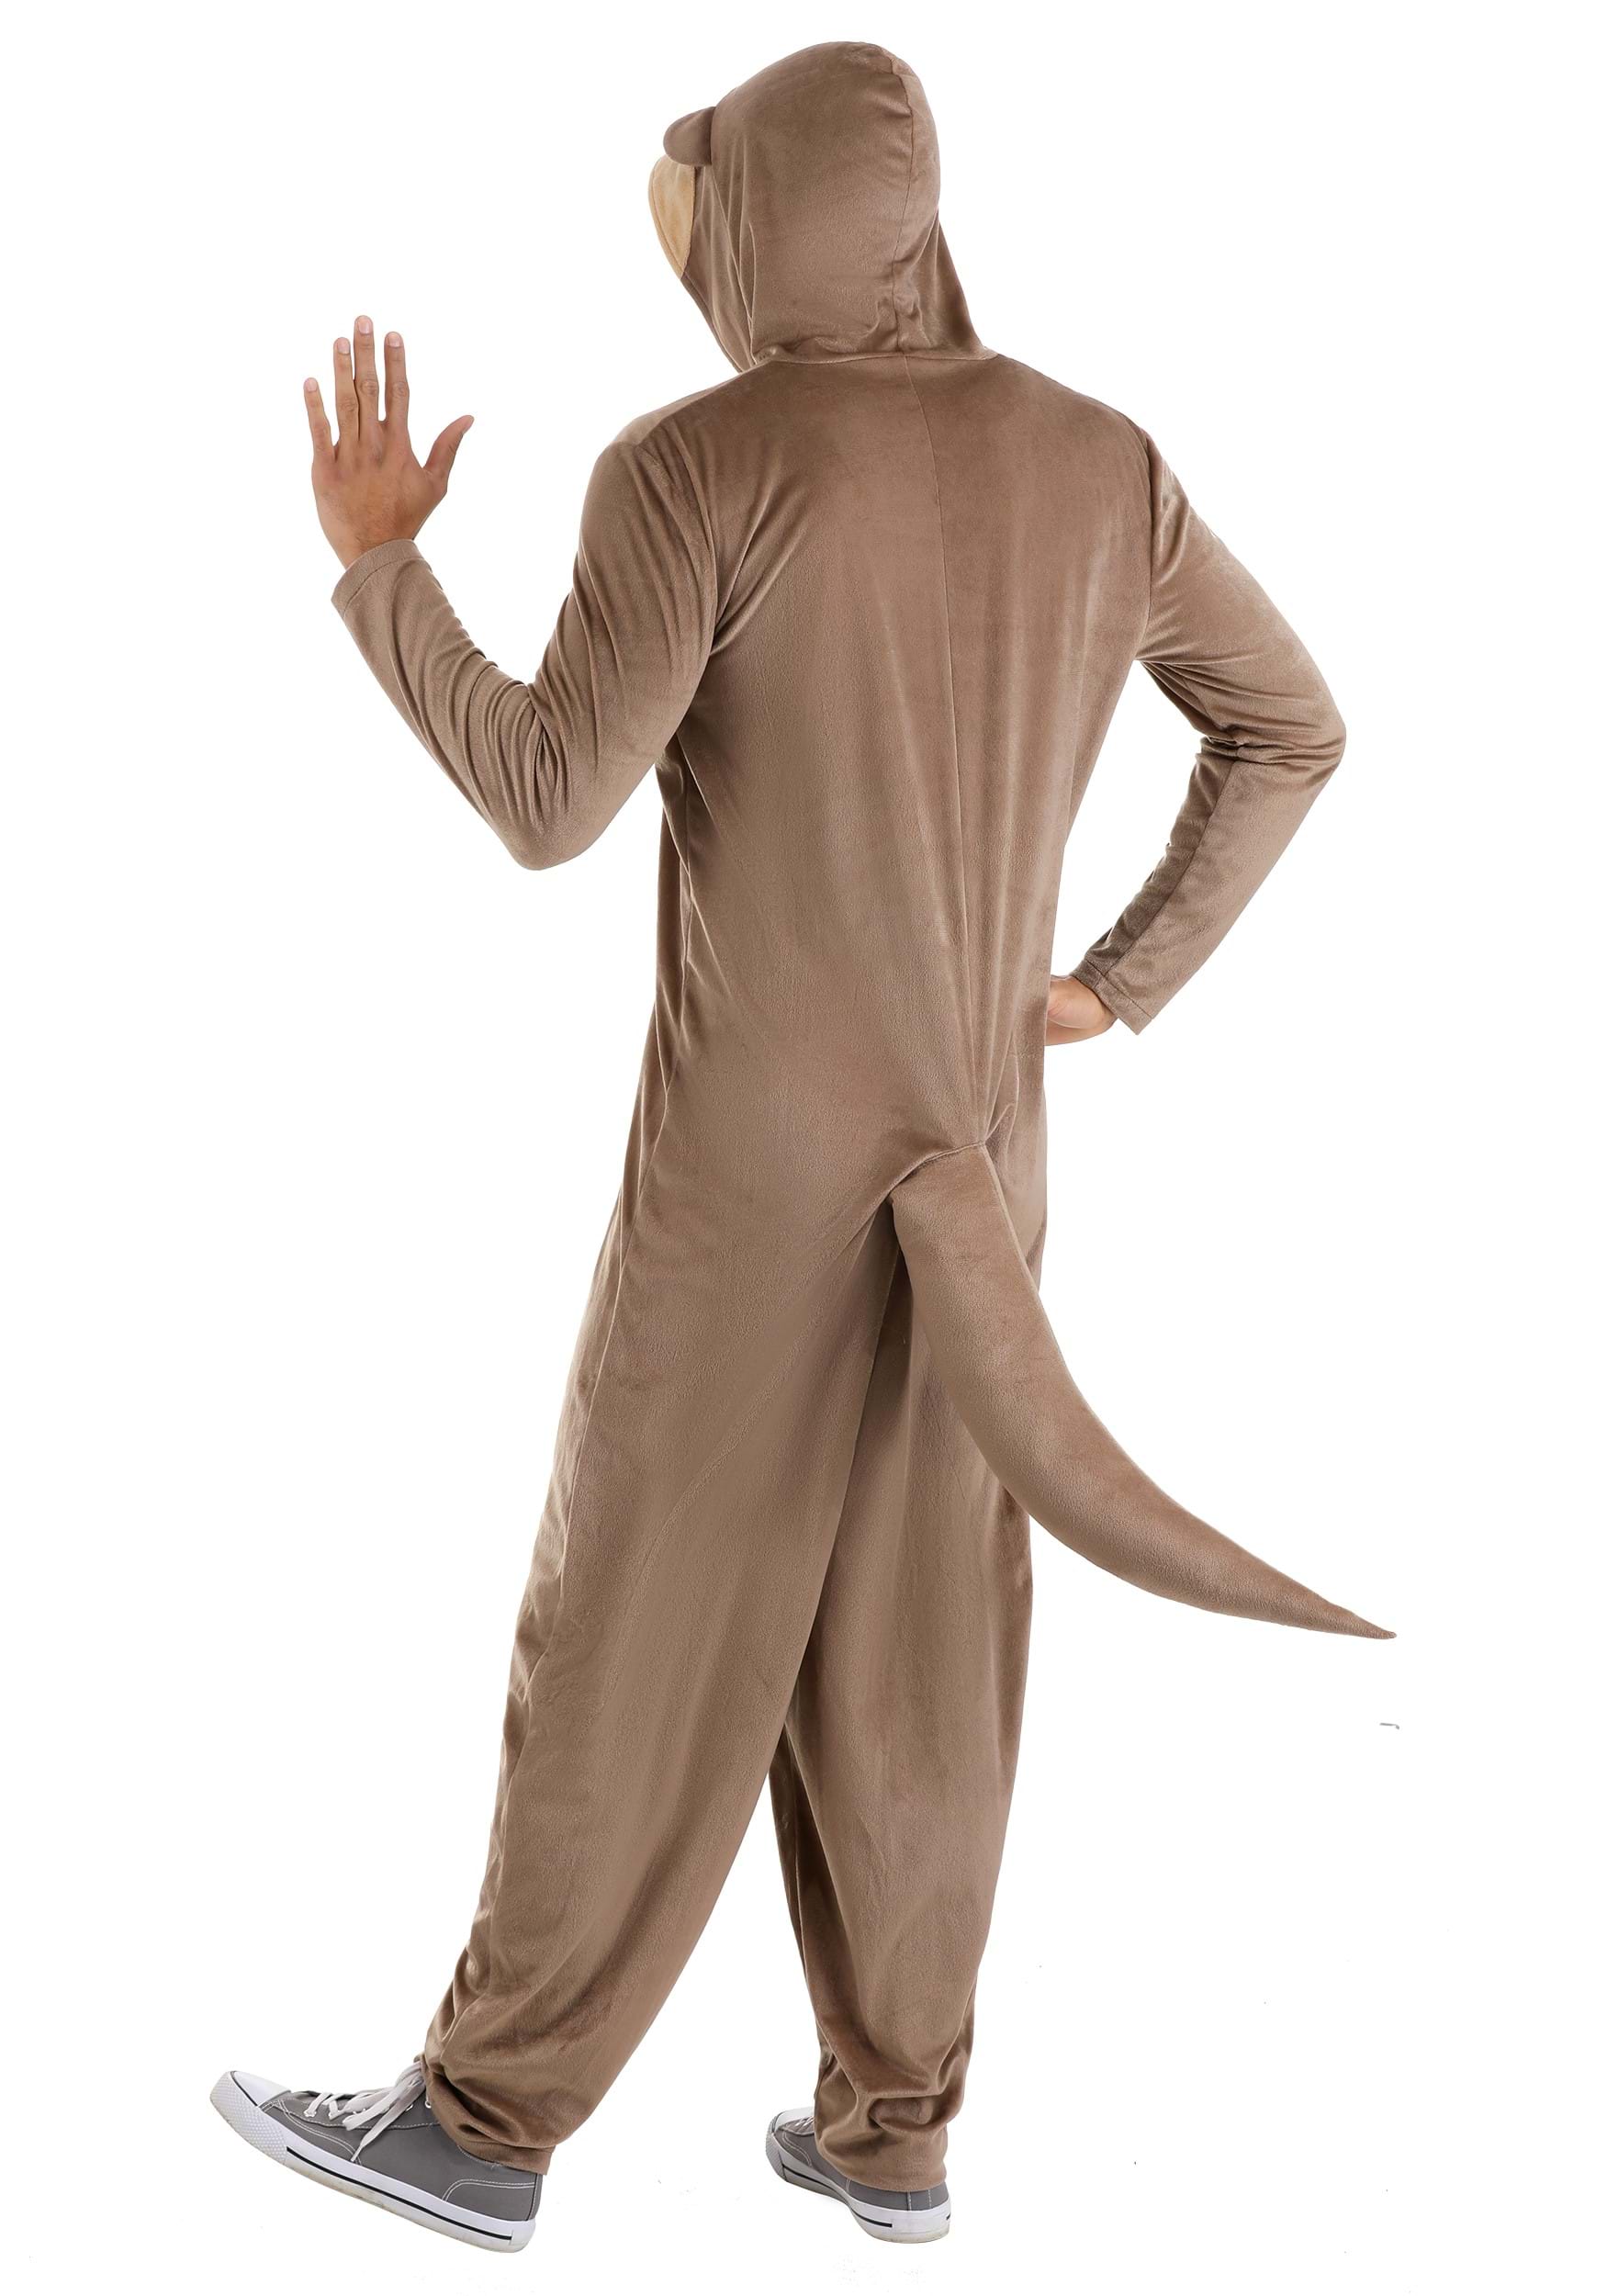 Otter Adult Costume